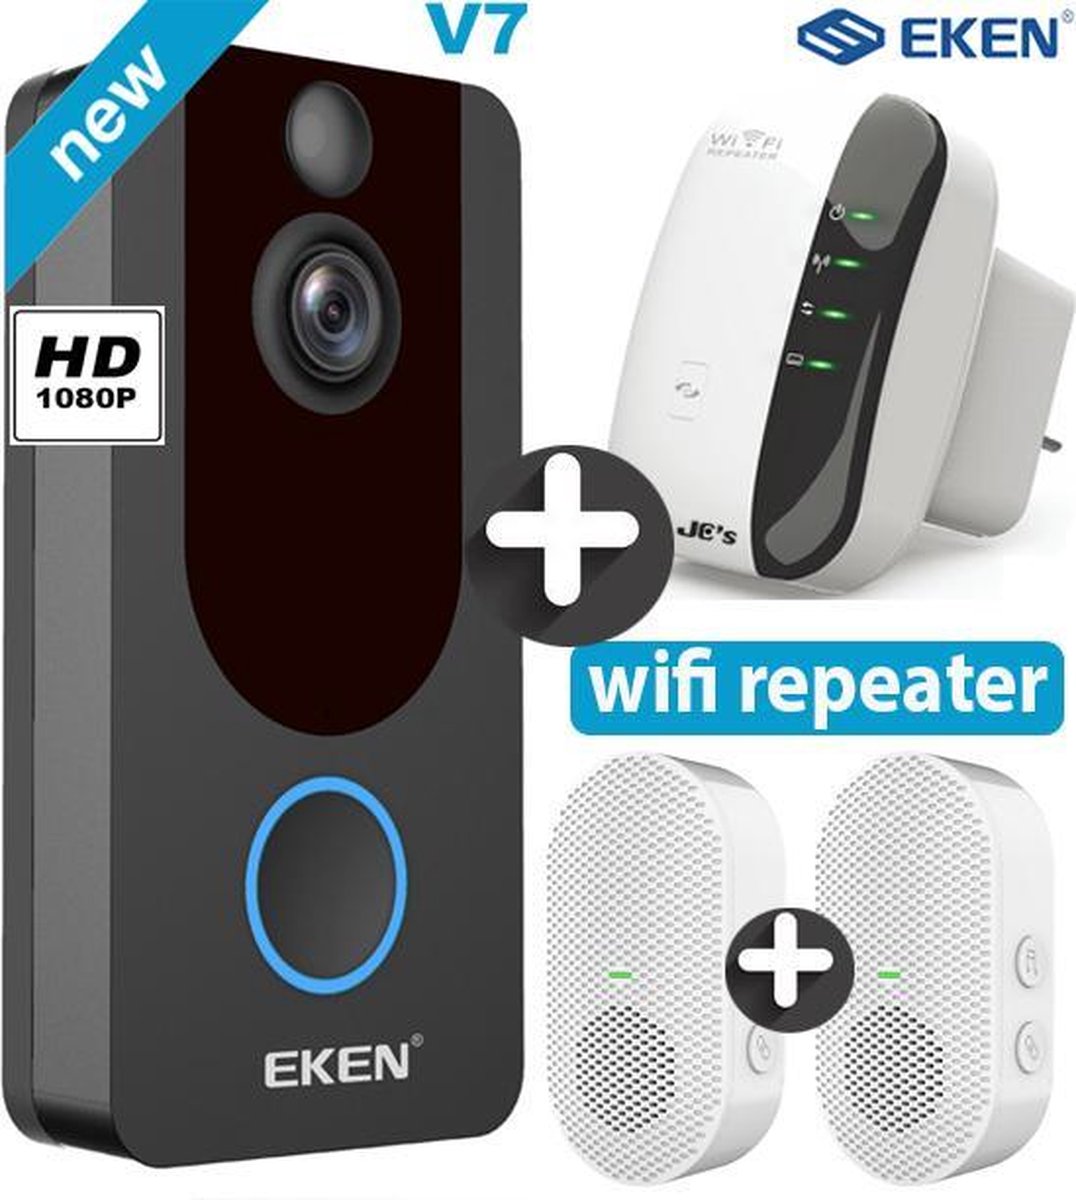 EKEN V7 HD video deurbel met camera + JC's Wifi Repeater + inclusief Samsung Oplaadbare Batterijen + Inclusief 2X Gong + Nederlandse gebruiksaanwijzing